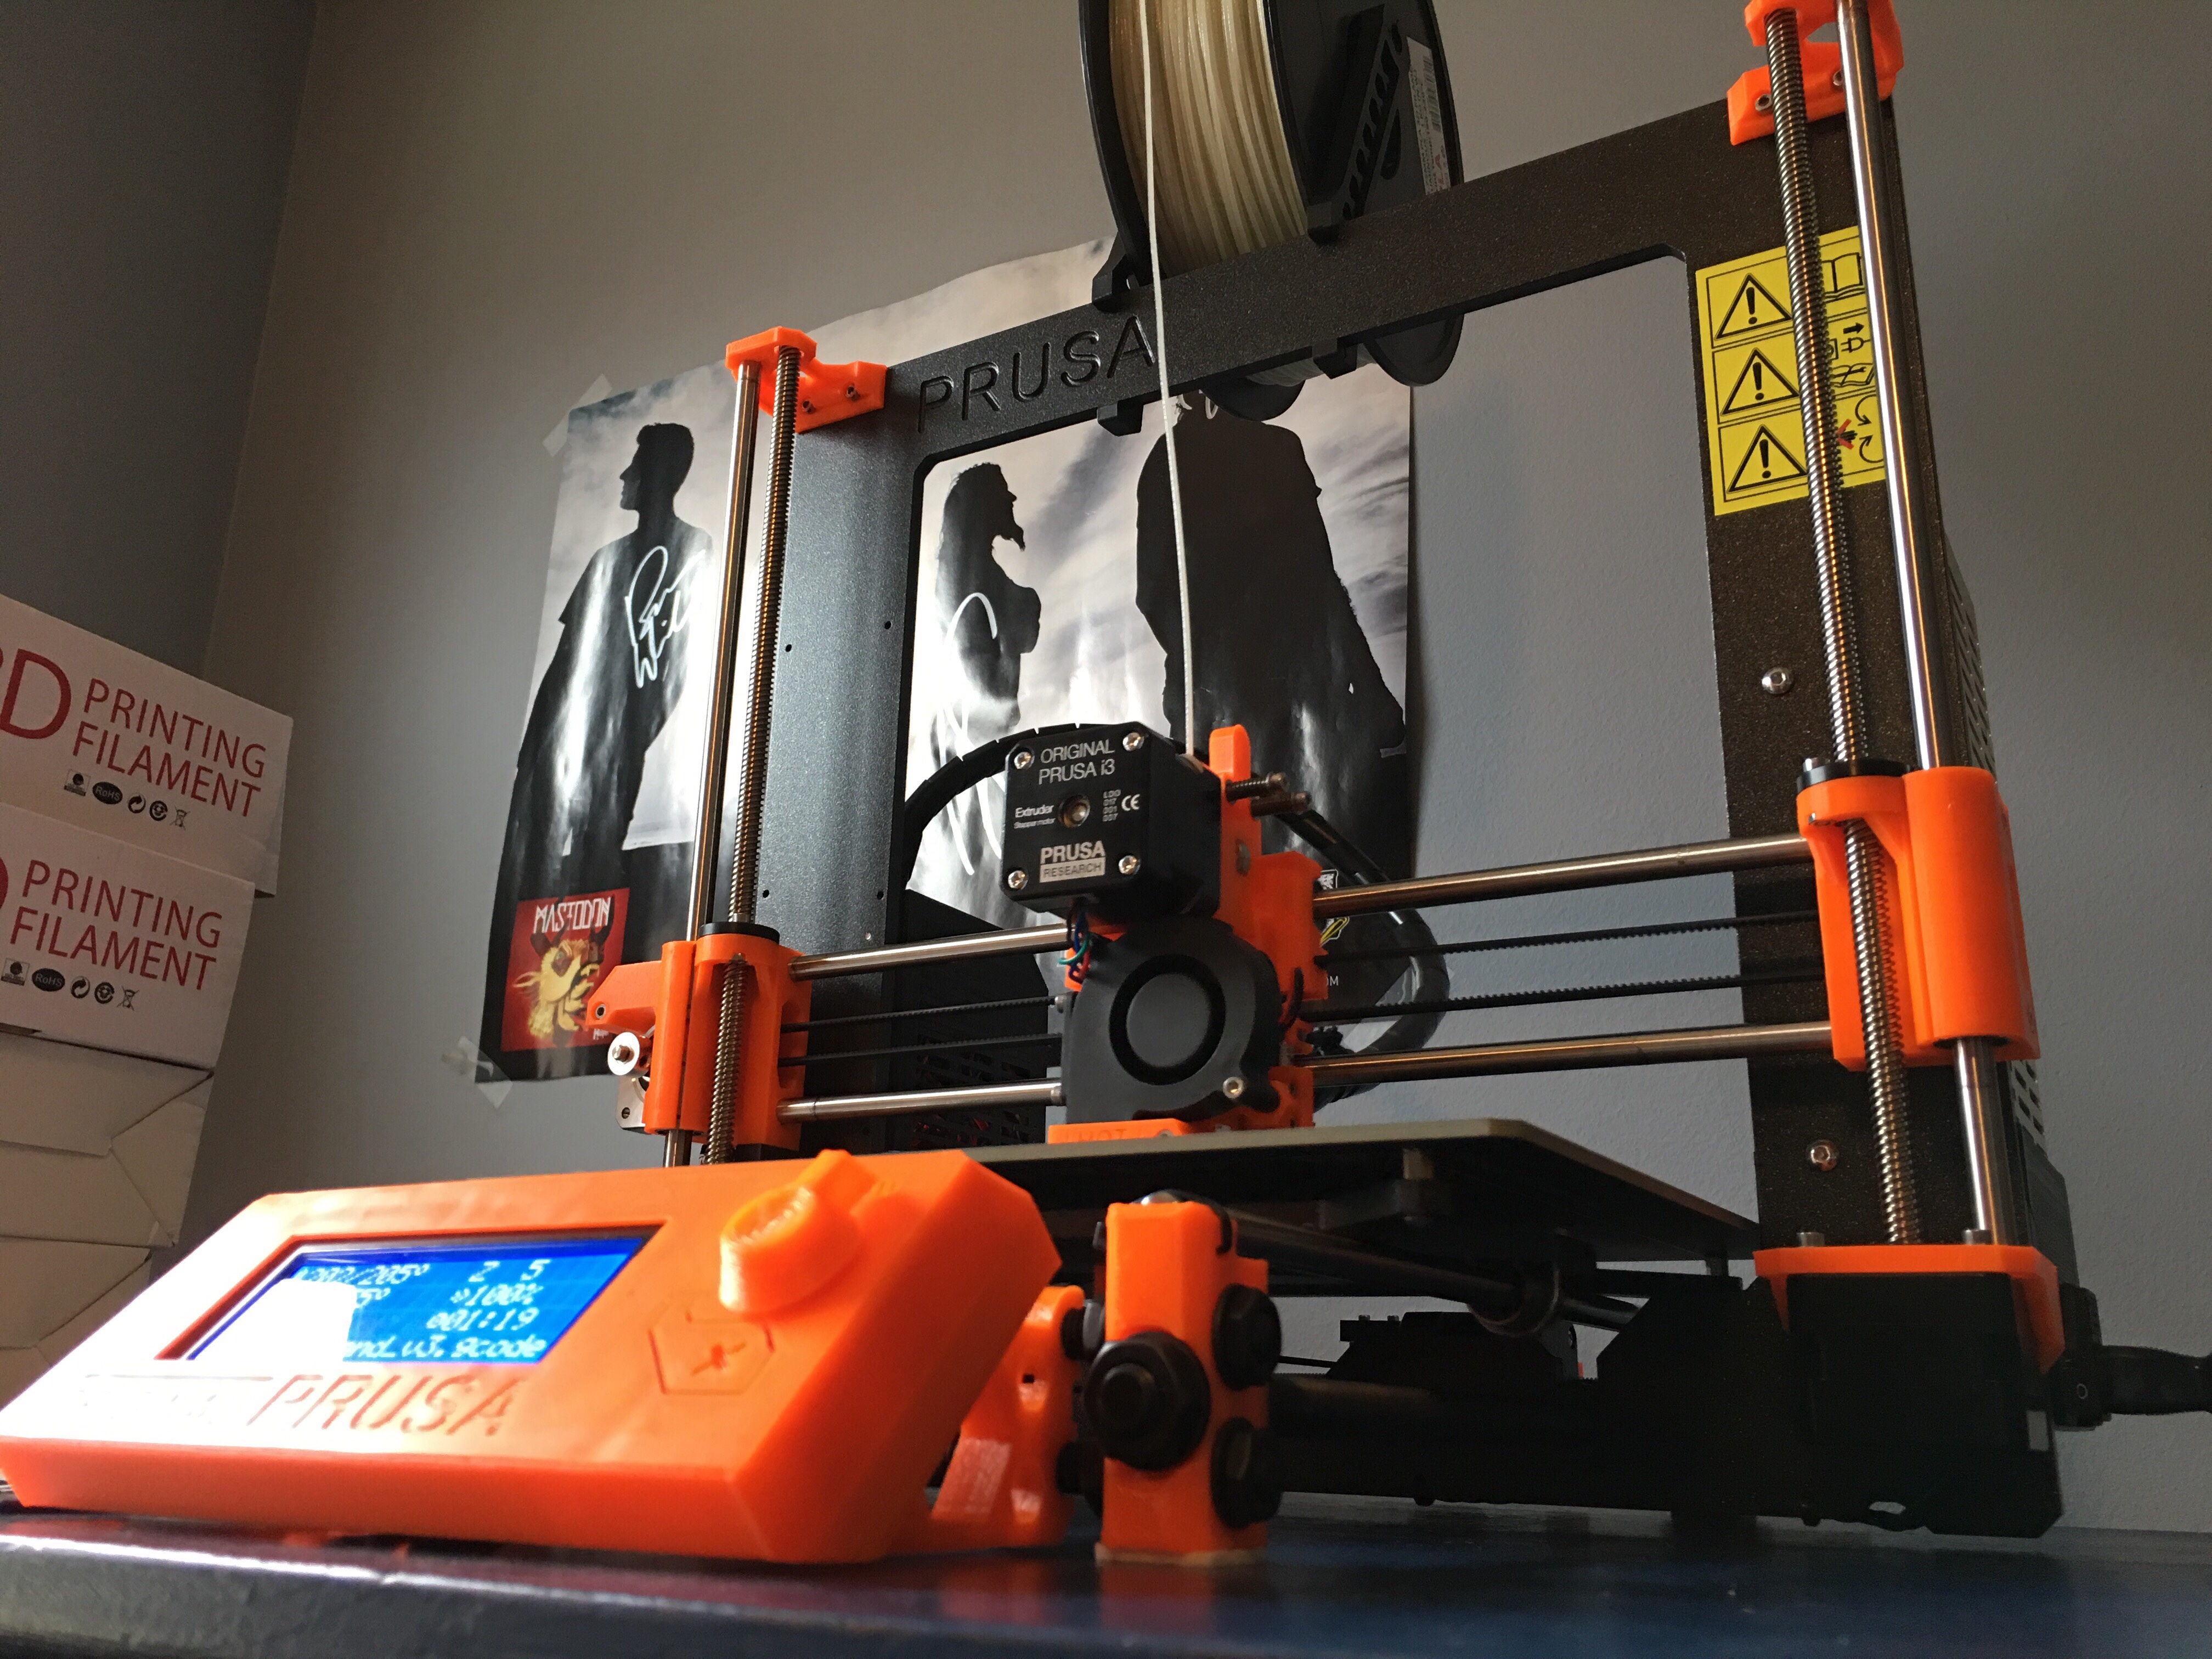 Permalink to Prusa i3 MK2S 3D printer kit assembly time lapse videos. 